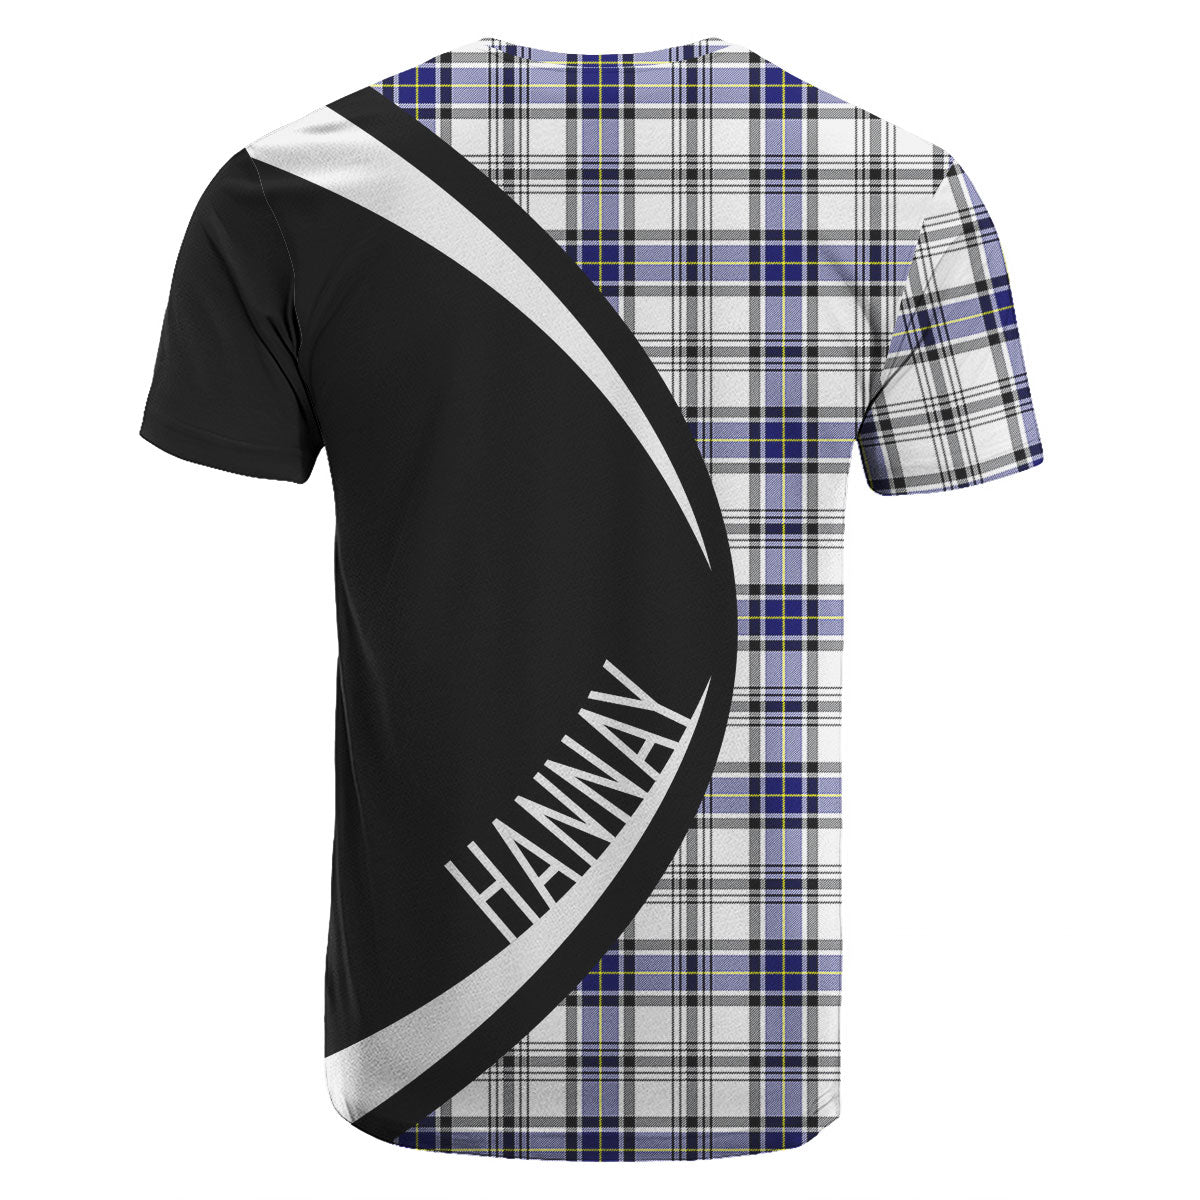 Hannay Modern Tartan Crest T-shirt - Circle Style